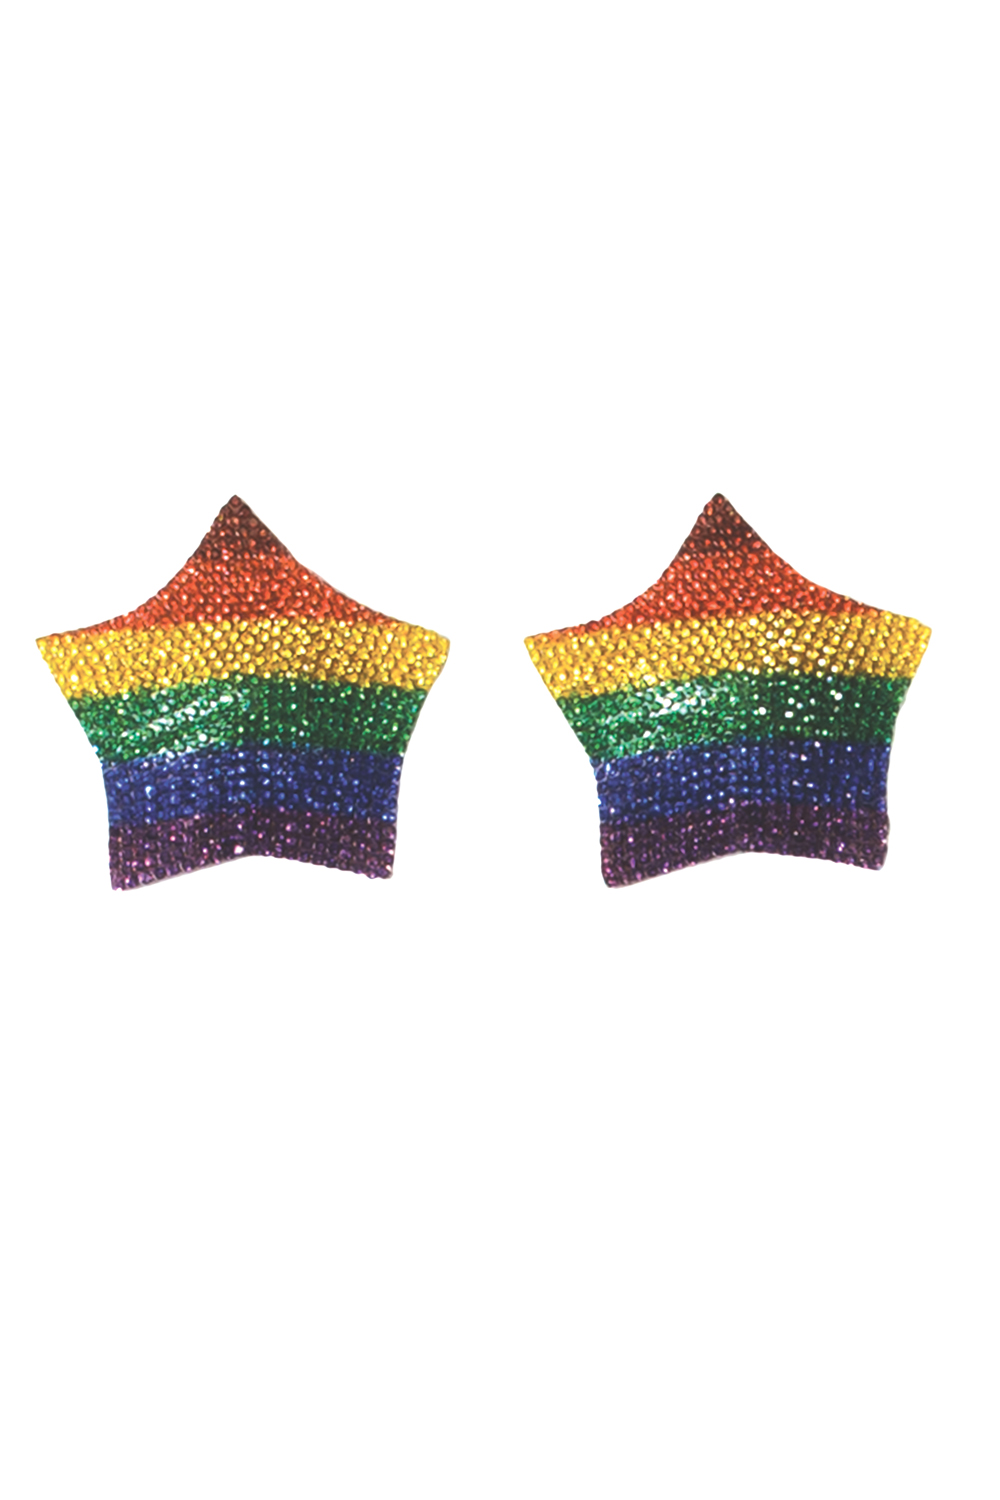 Rainbow star rhinestone pasties 7265 Edmonton